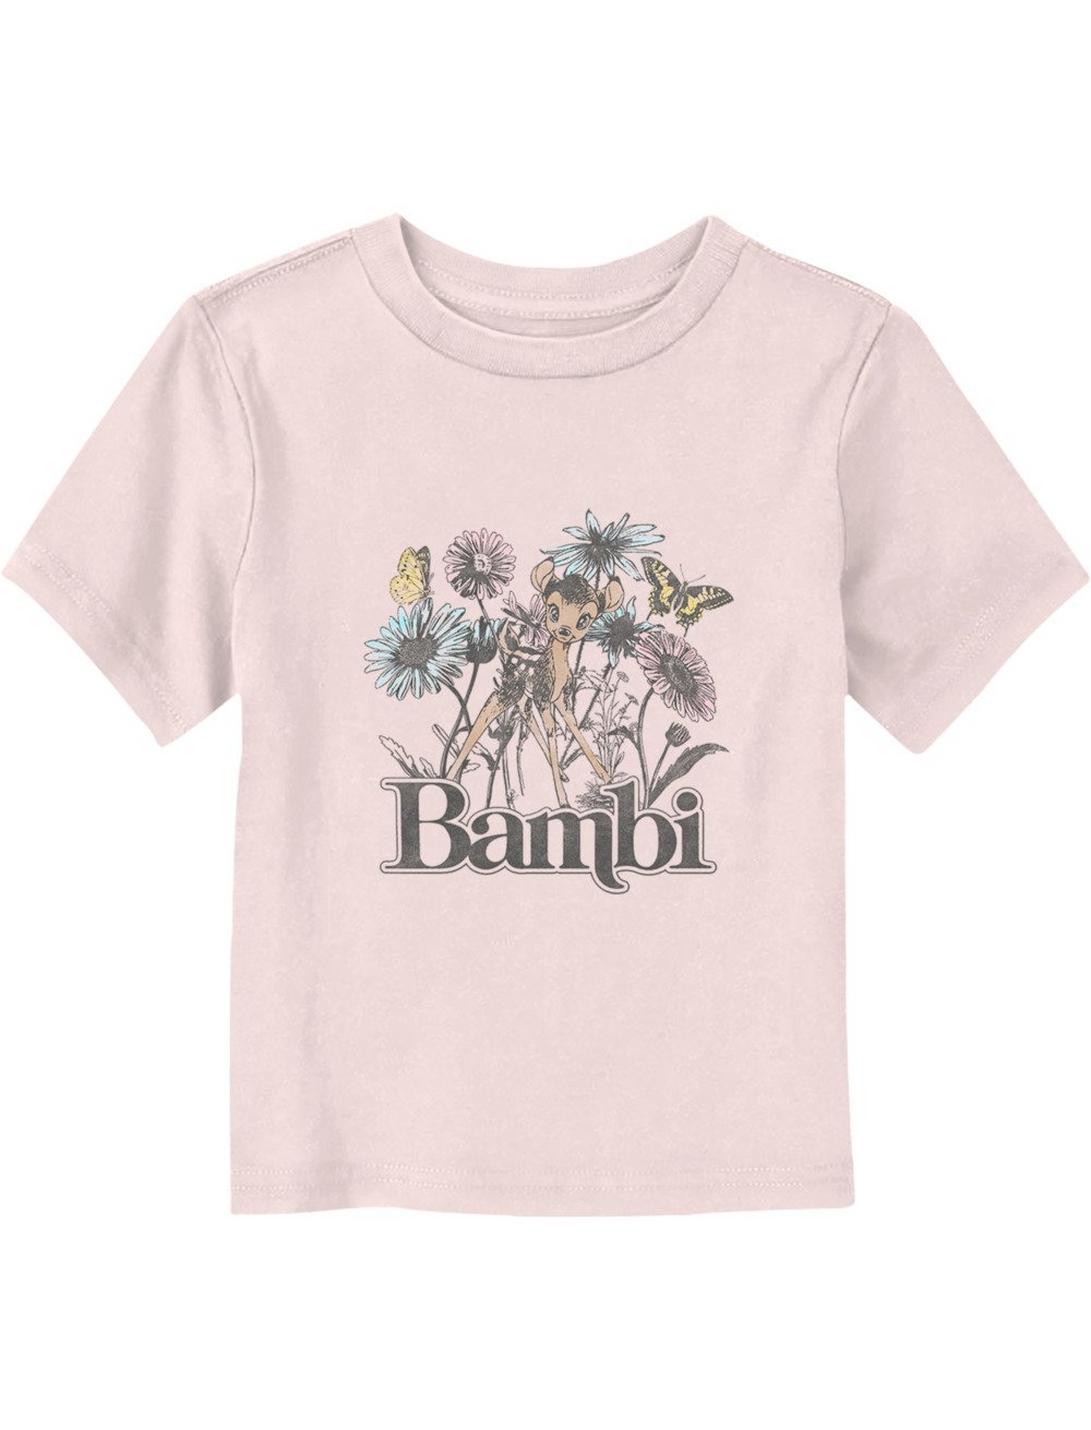 Disney Bambi Watercolor Floral Toddler T-Shirt, LIGHT PINK, hi-res